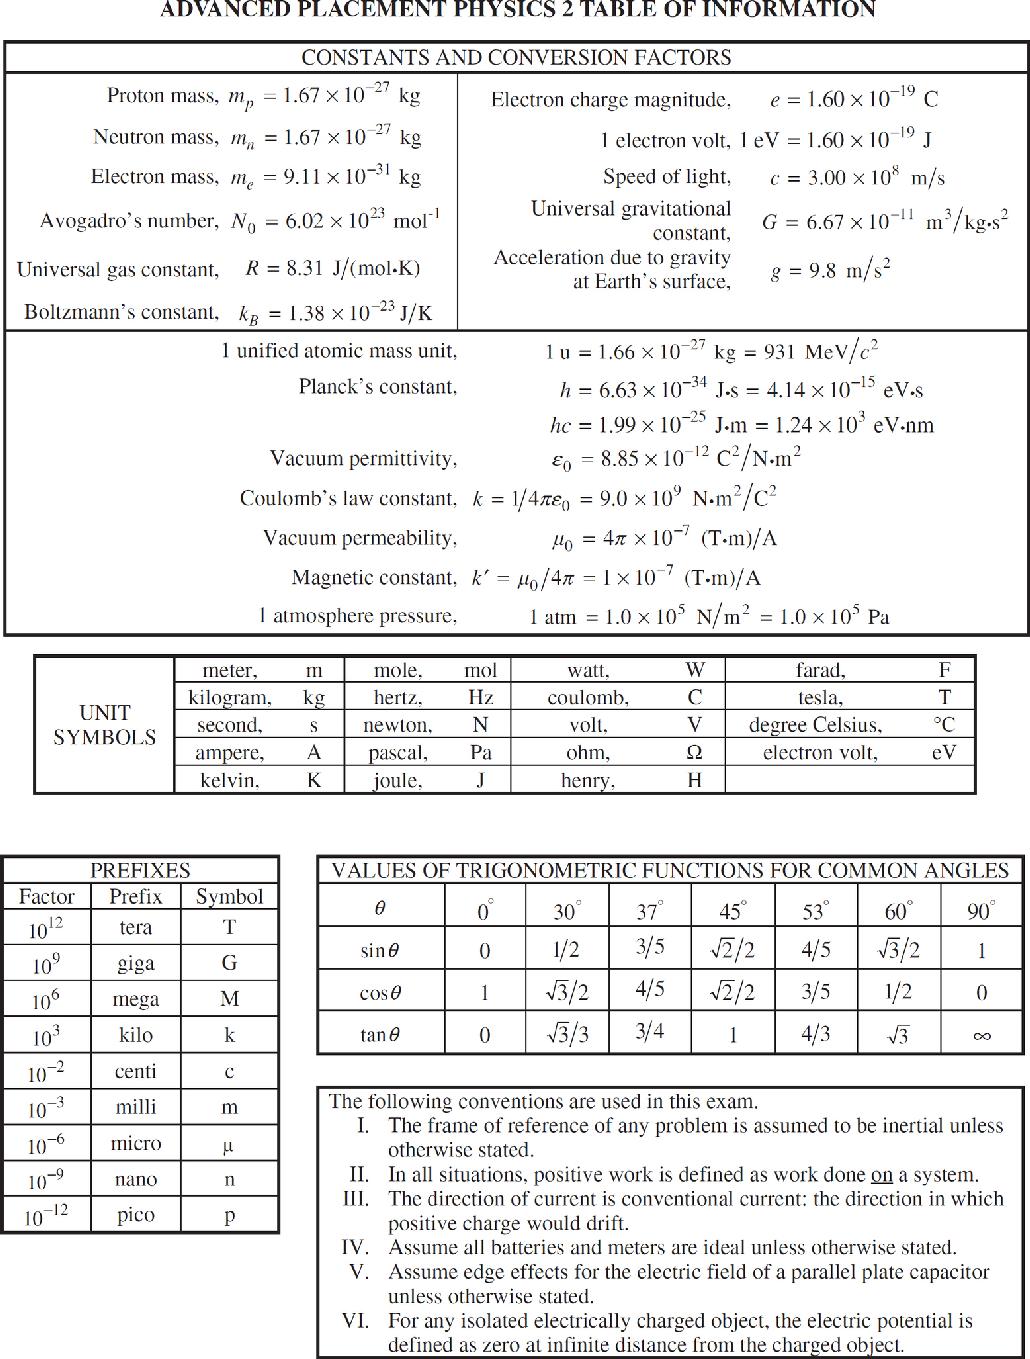 ap physics 2 worksheet